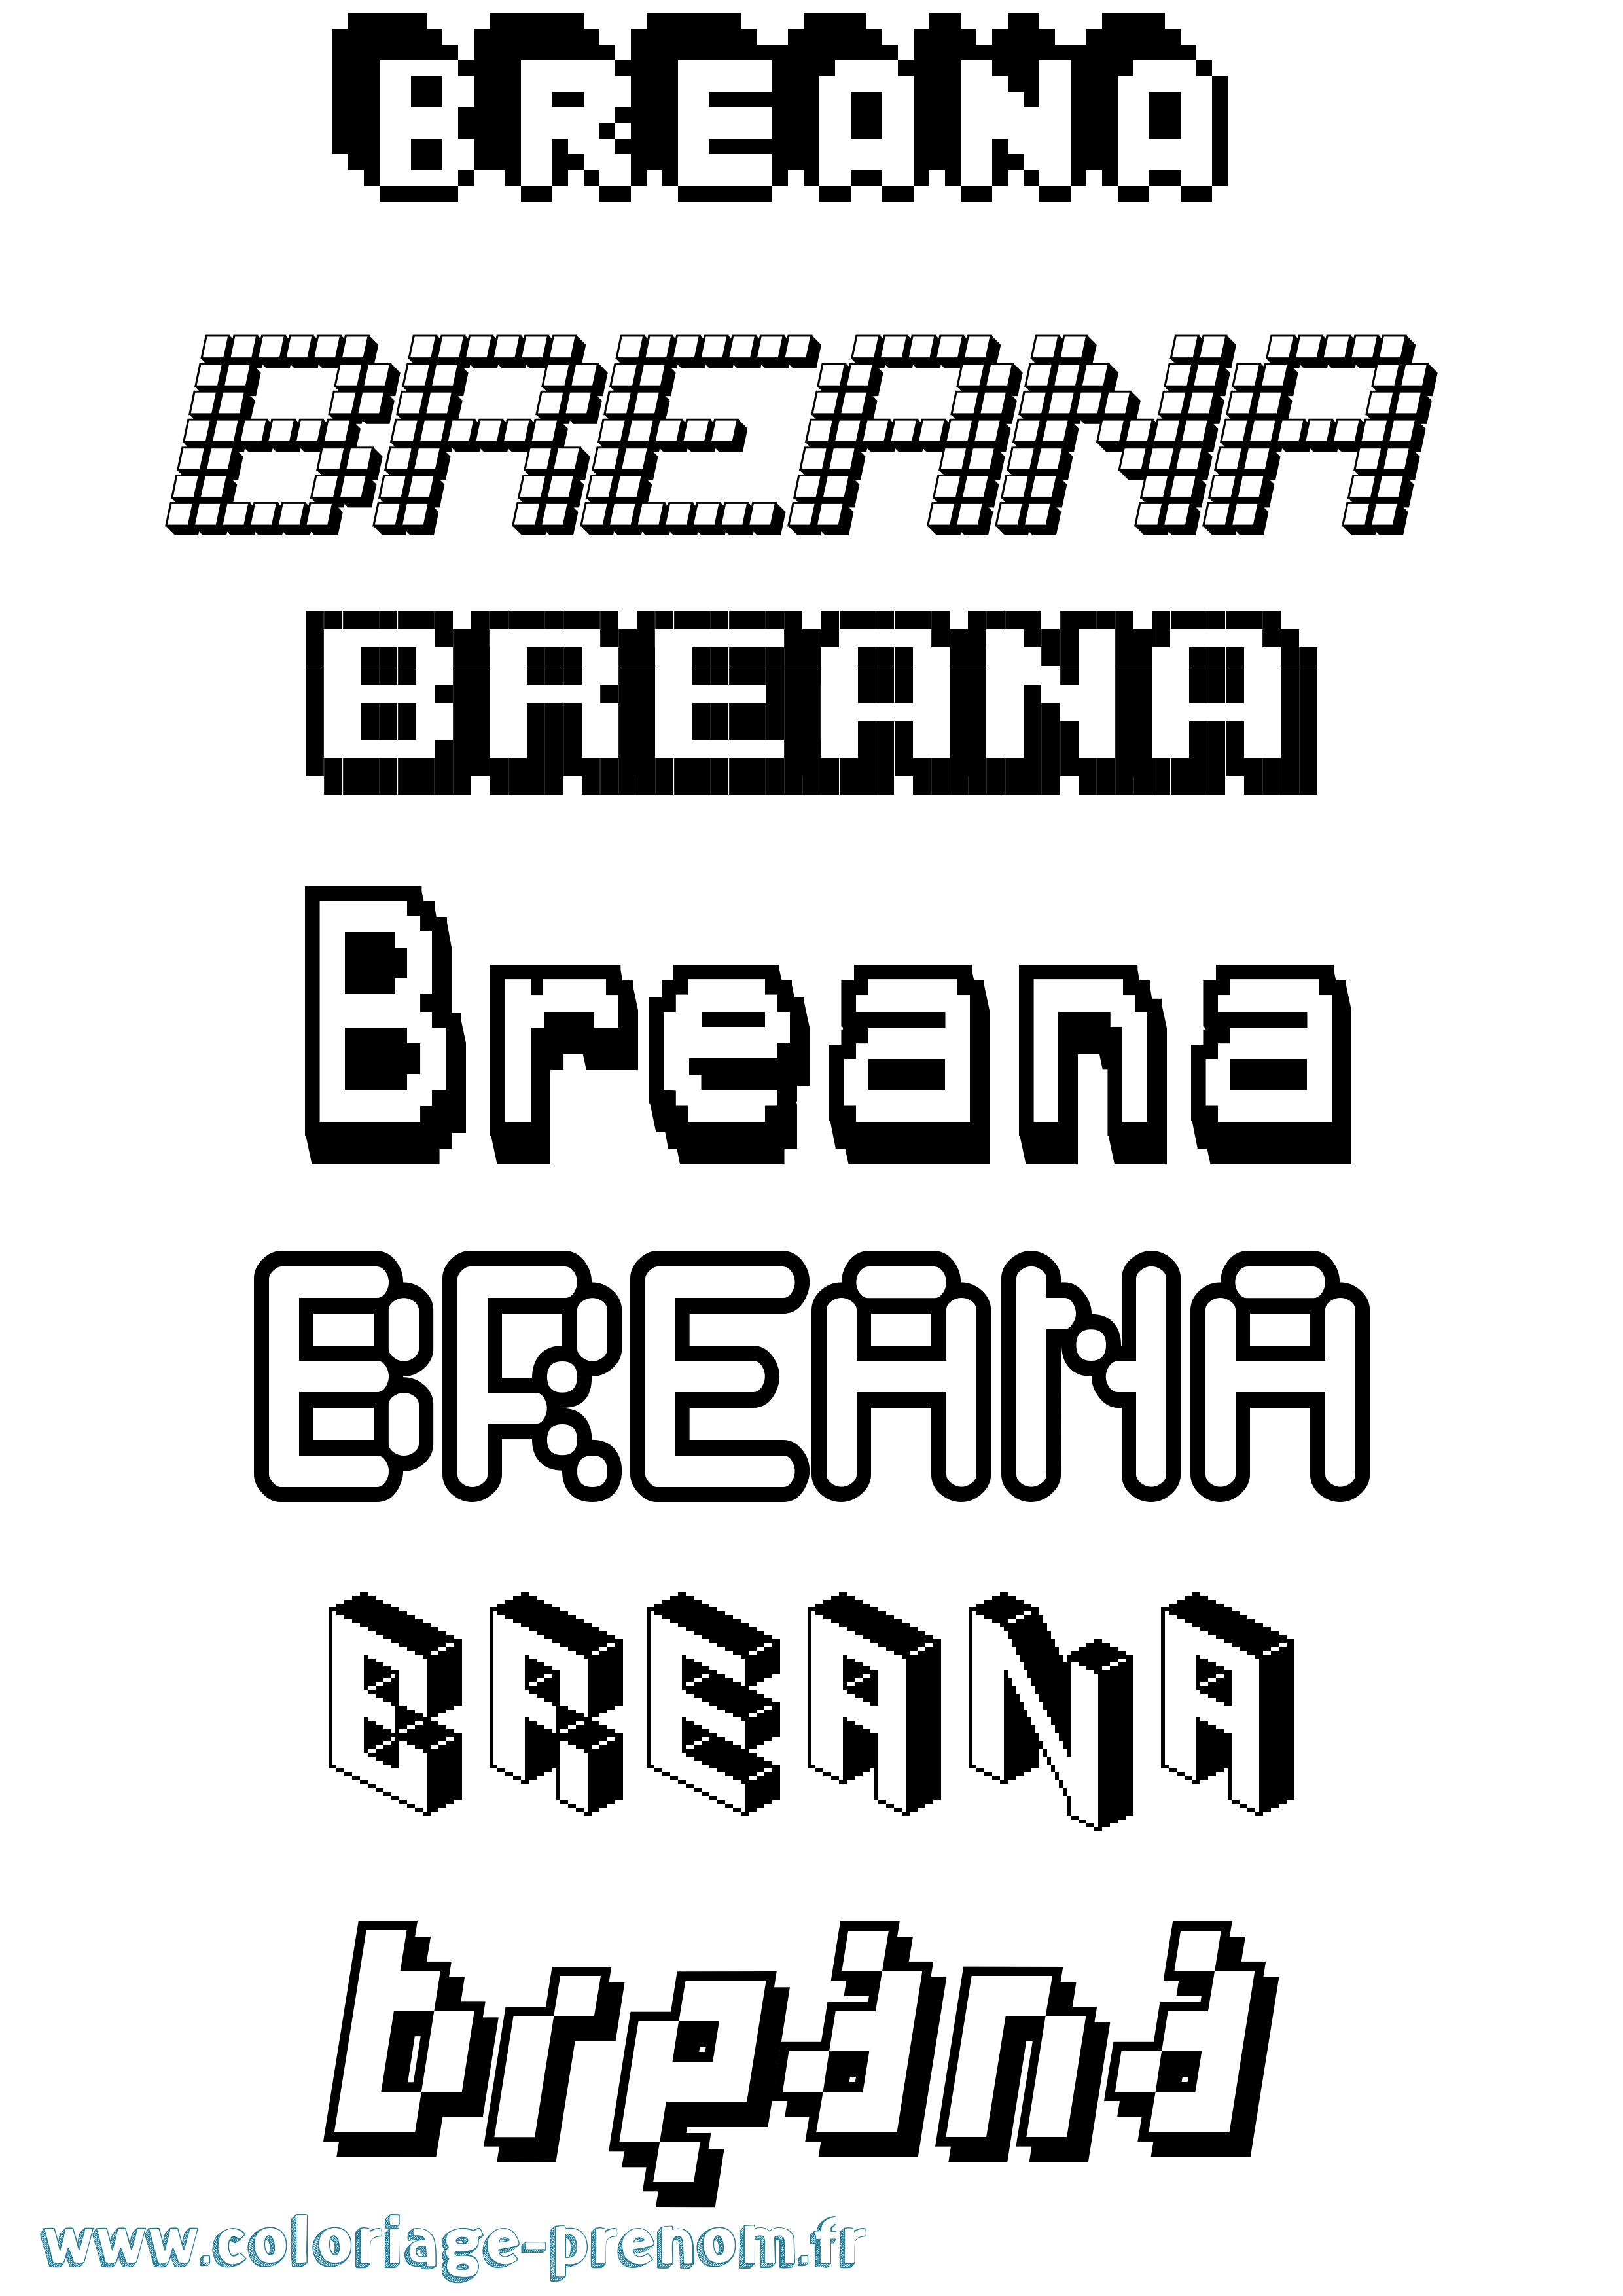 Coloriage prénom Breana Pixel